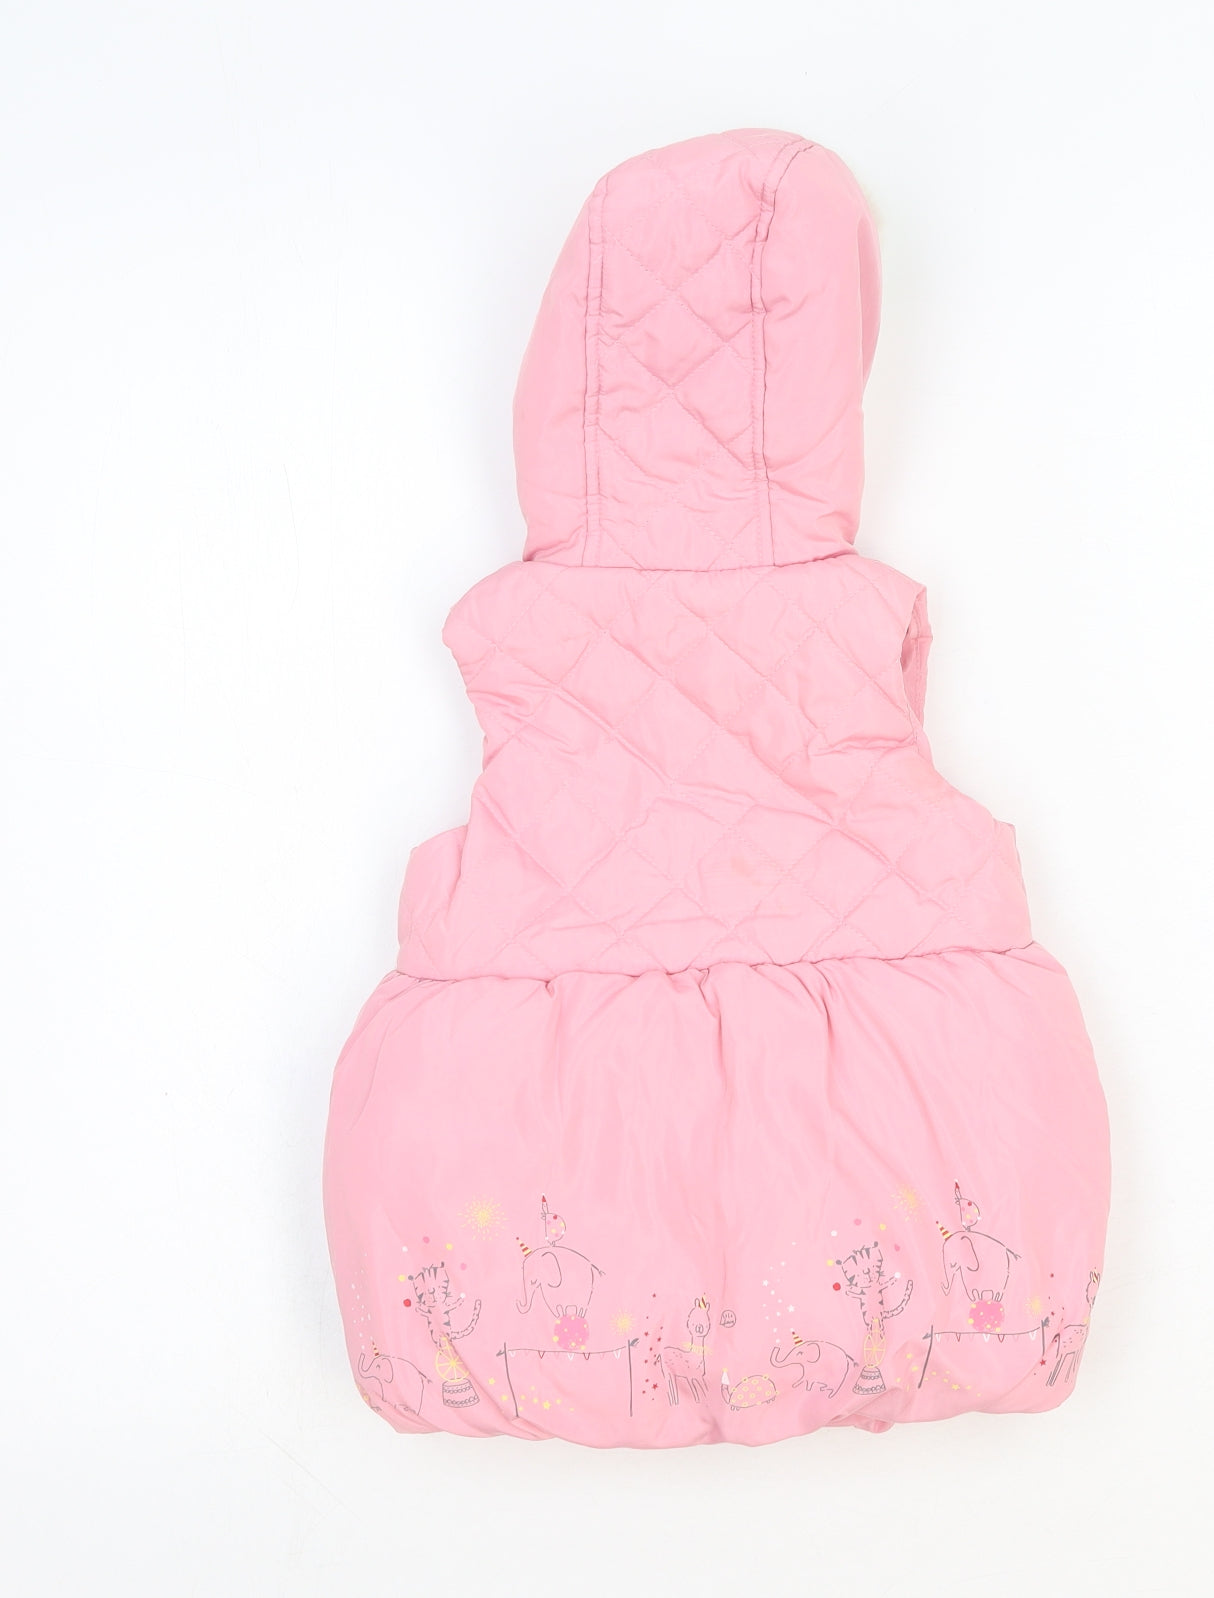 Authentic Girls Pink Puffer Jacket Jacket Size 9-12 Months Zip - Cute Animals Print